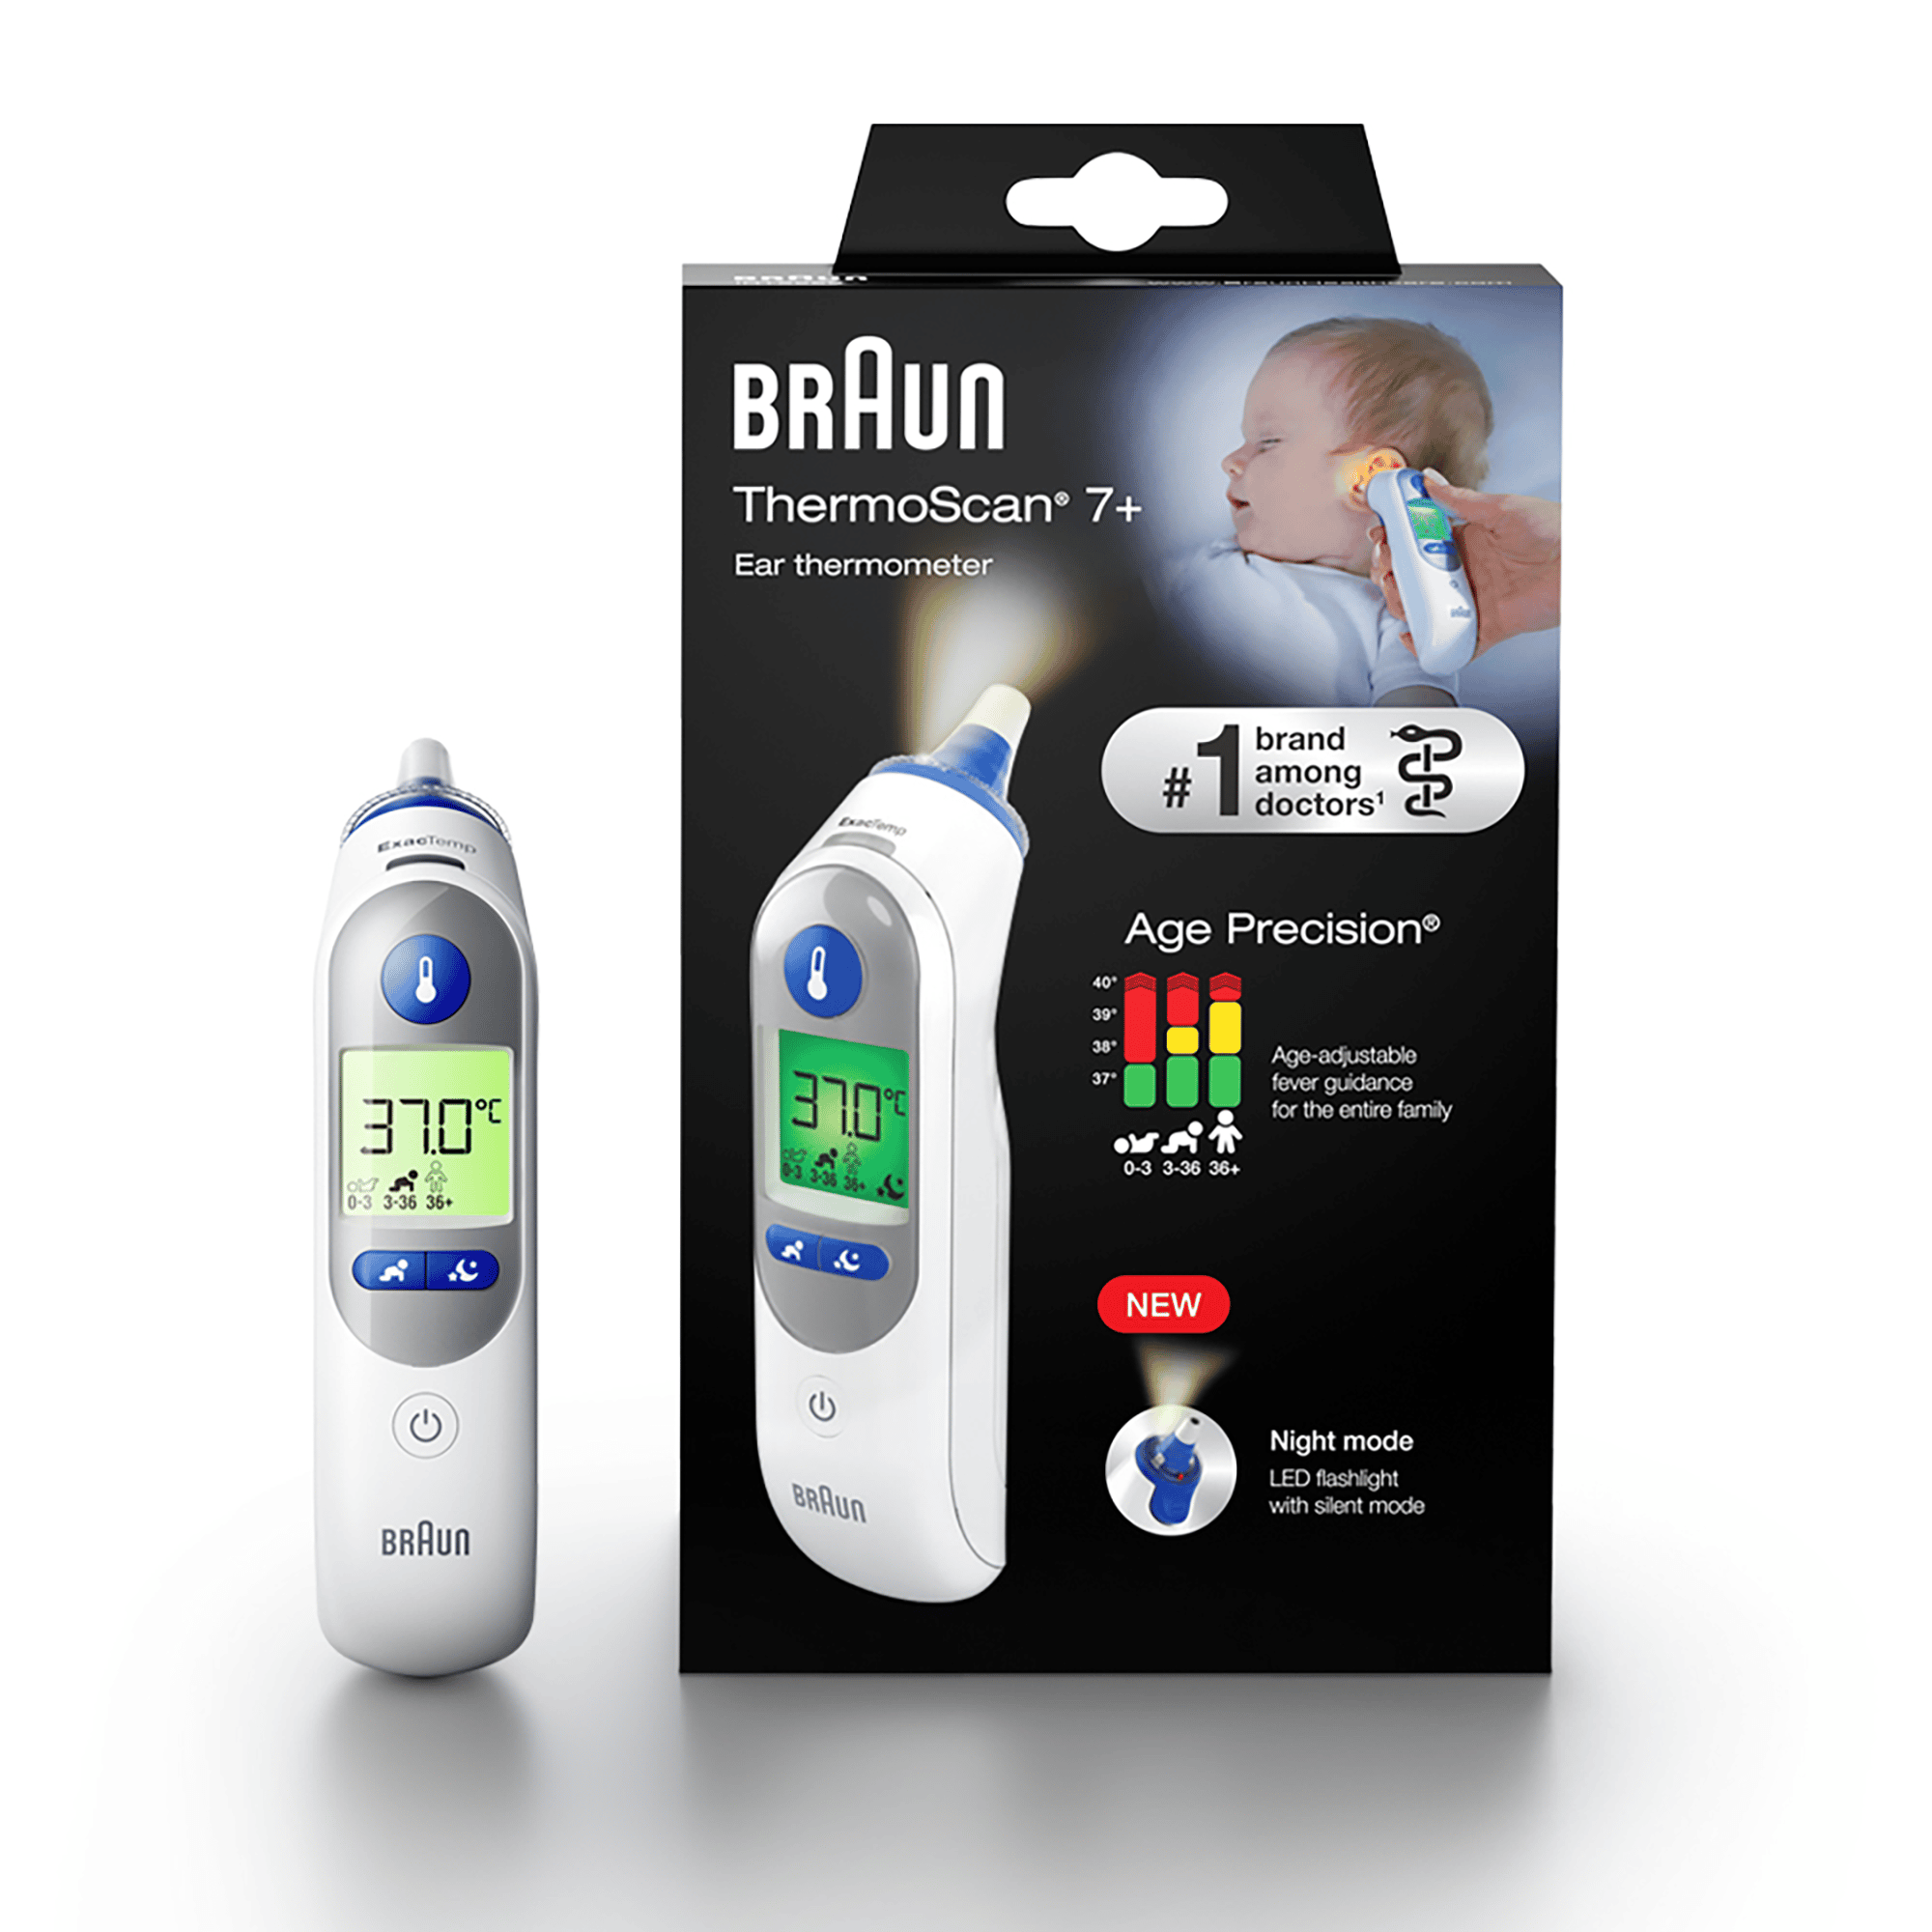 BRAUN ThermoScan® 7+ Ohrthermometer | BabyOne